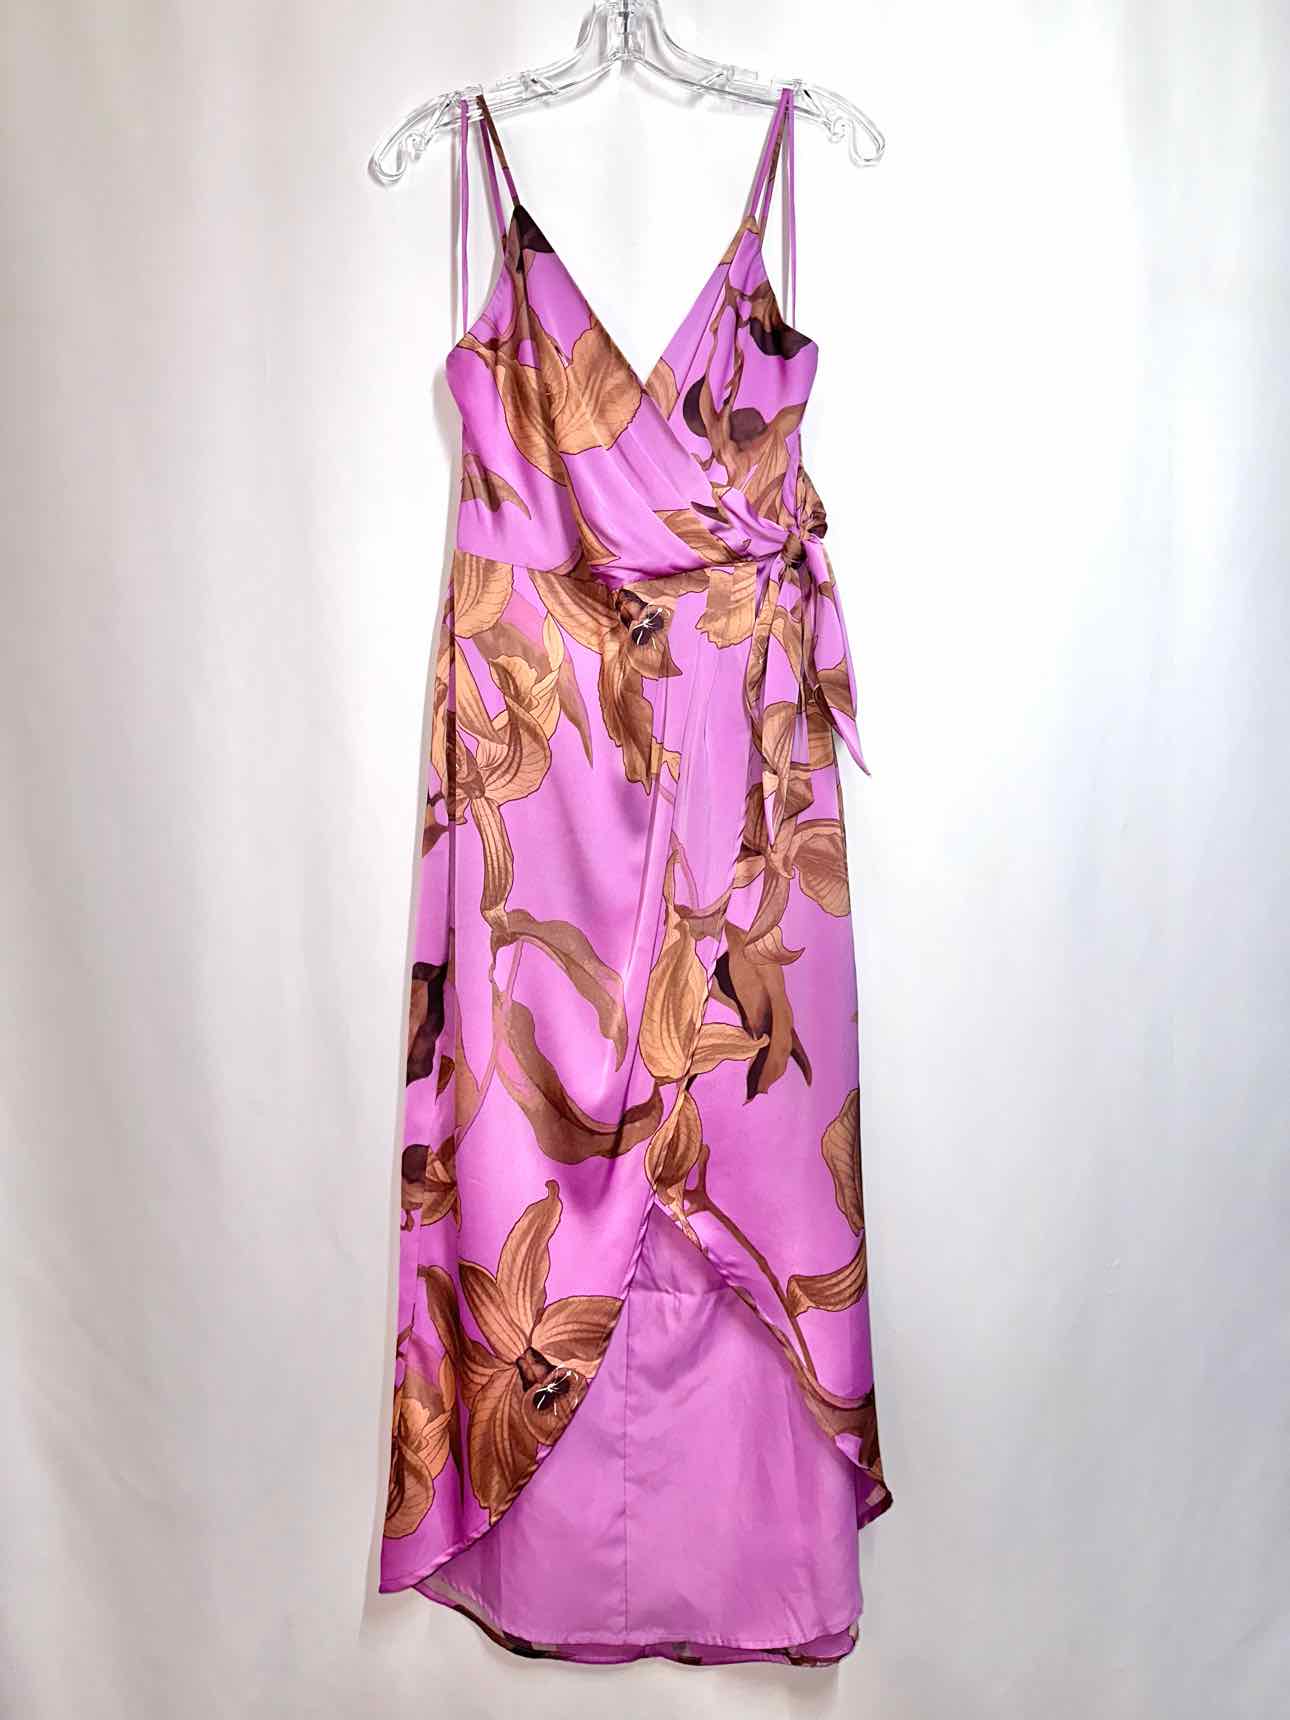 Express Purple Floral Dress Size S